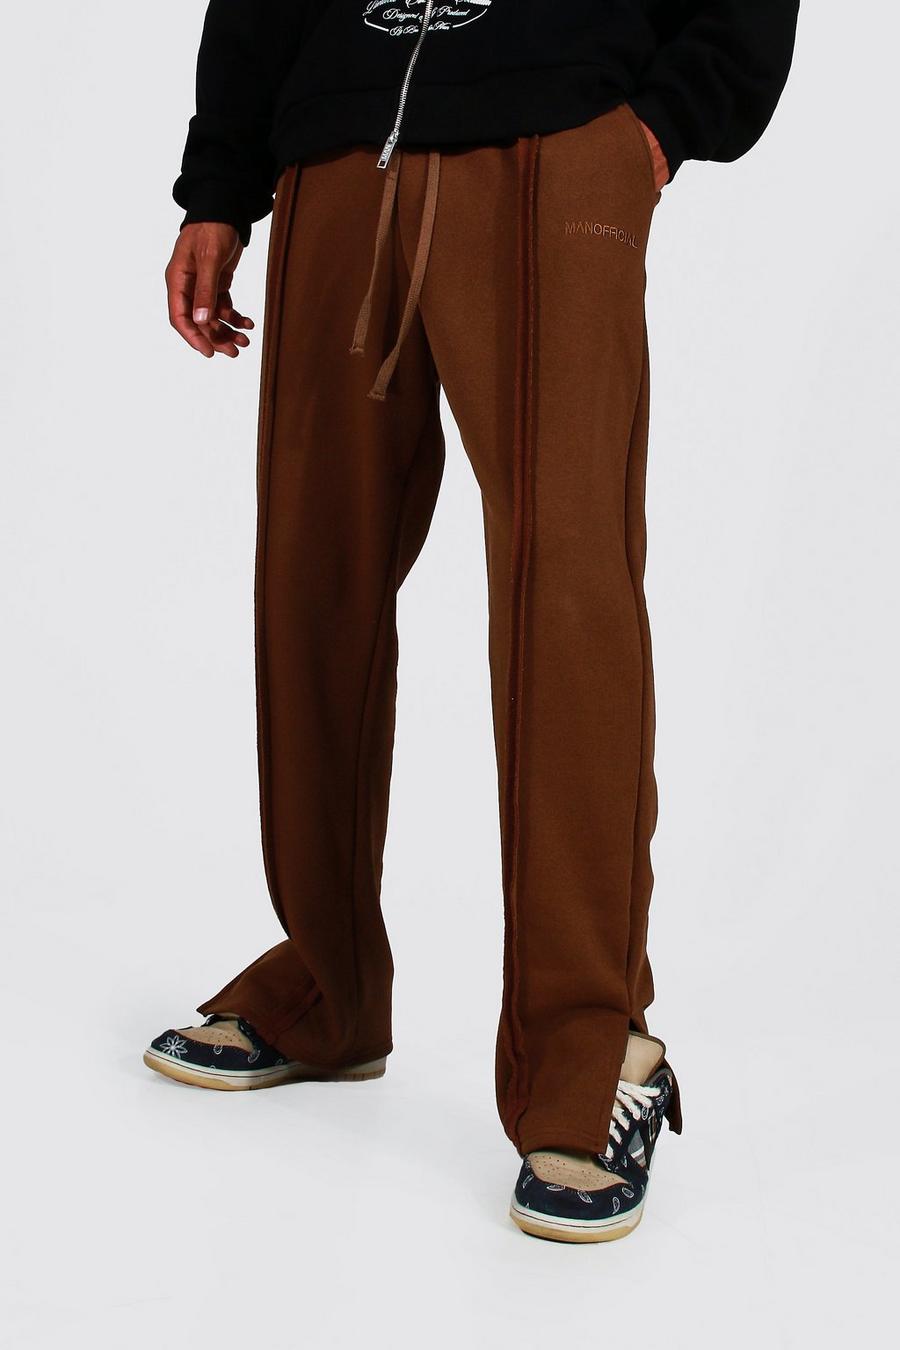 Pantalón deportivo Tall MAN Official holgado, Chocolate marrón image number 1